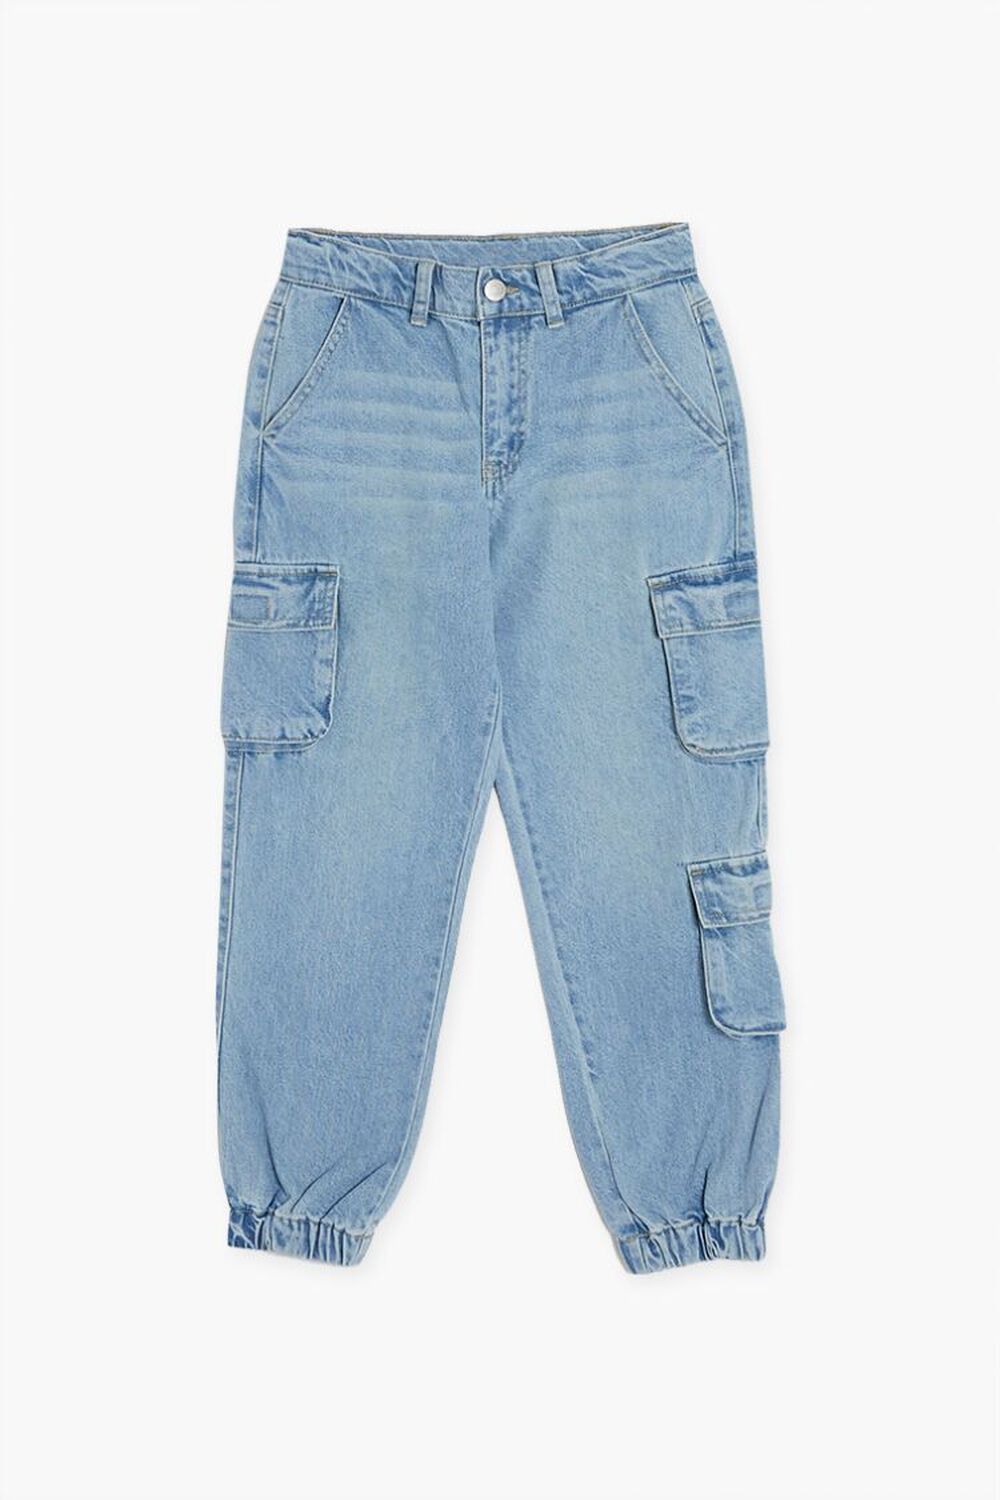 Buy FORGIVE Women's/Girls Light Blue Denim Cargo Joggers Jeans